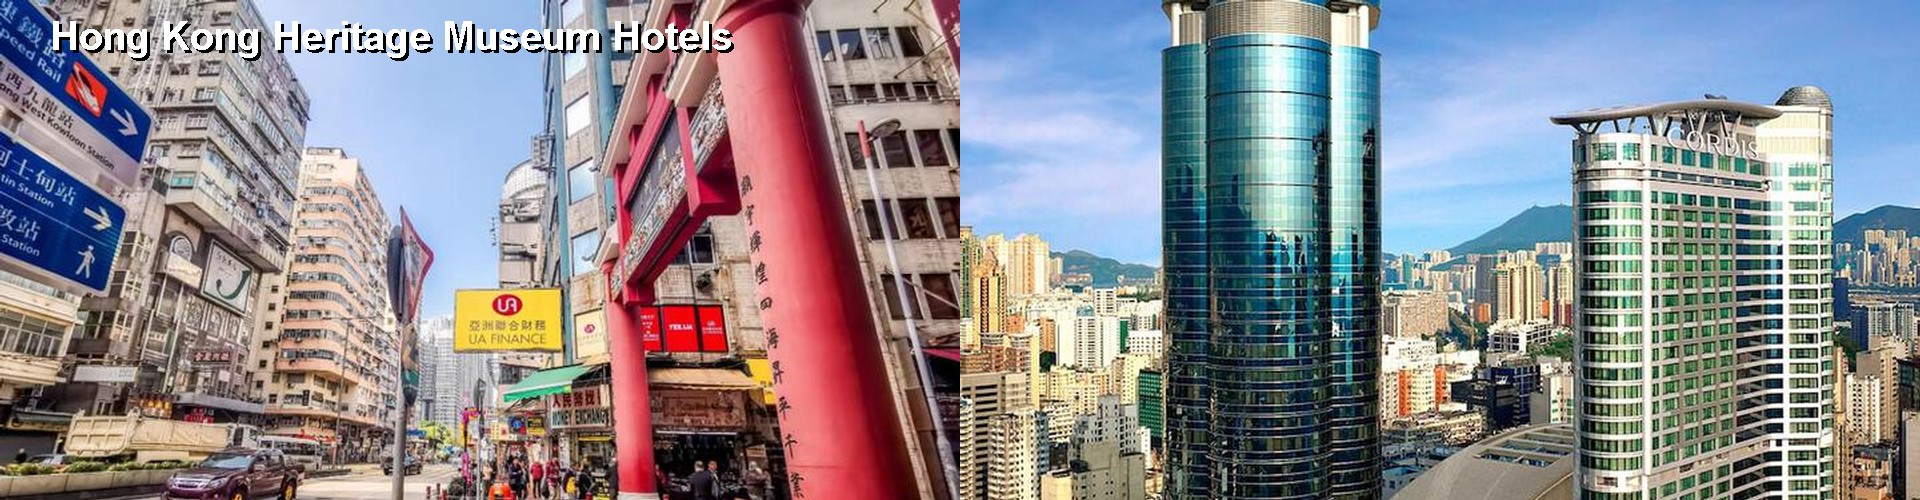 5 Best Hotels near Hong Kong Heritage Museum